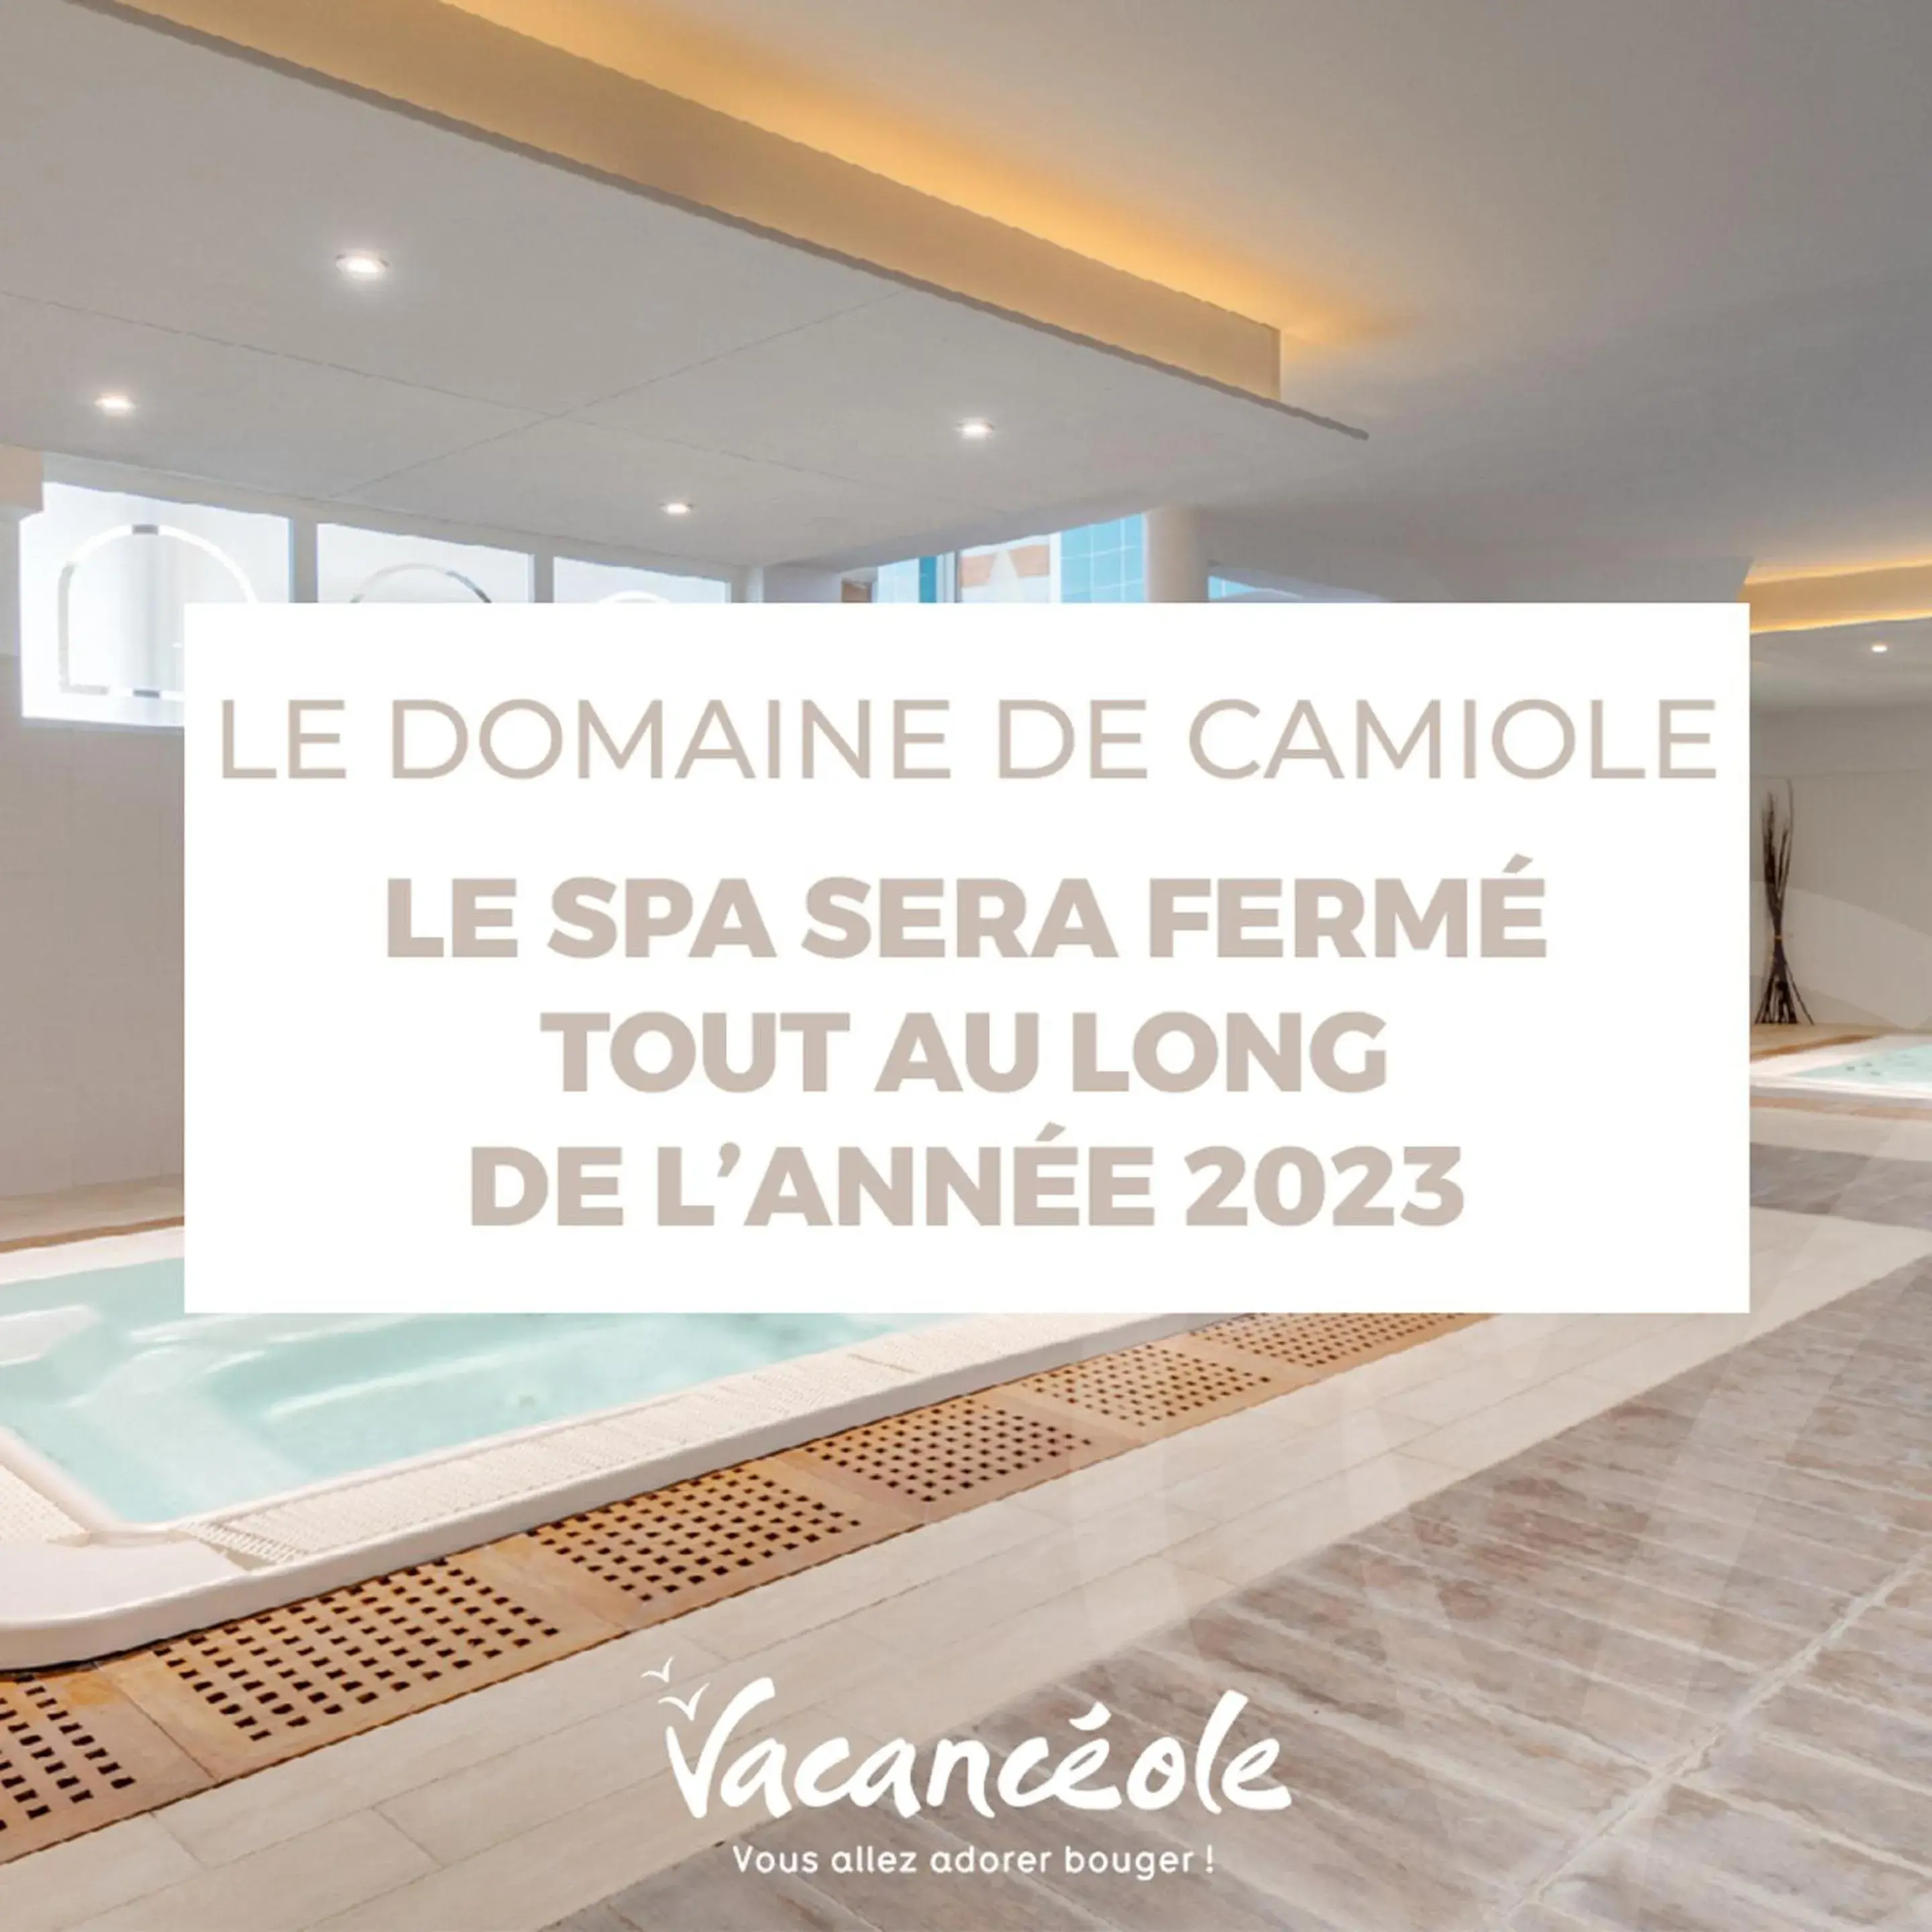 Spa and wellness centre/facilities in Vacancéole  Le Domaine de Camiole